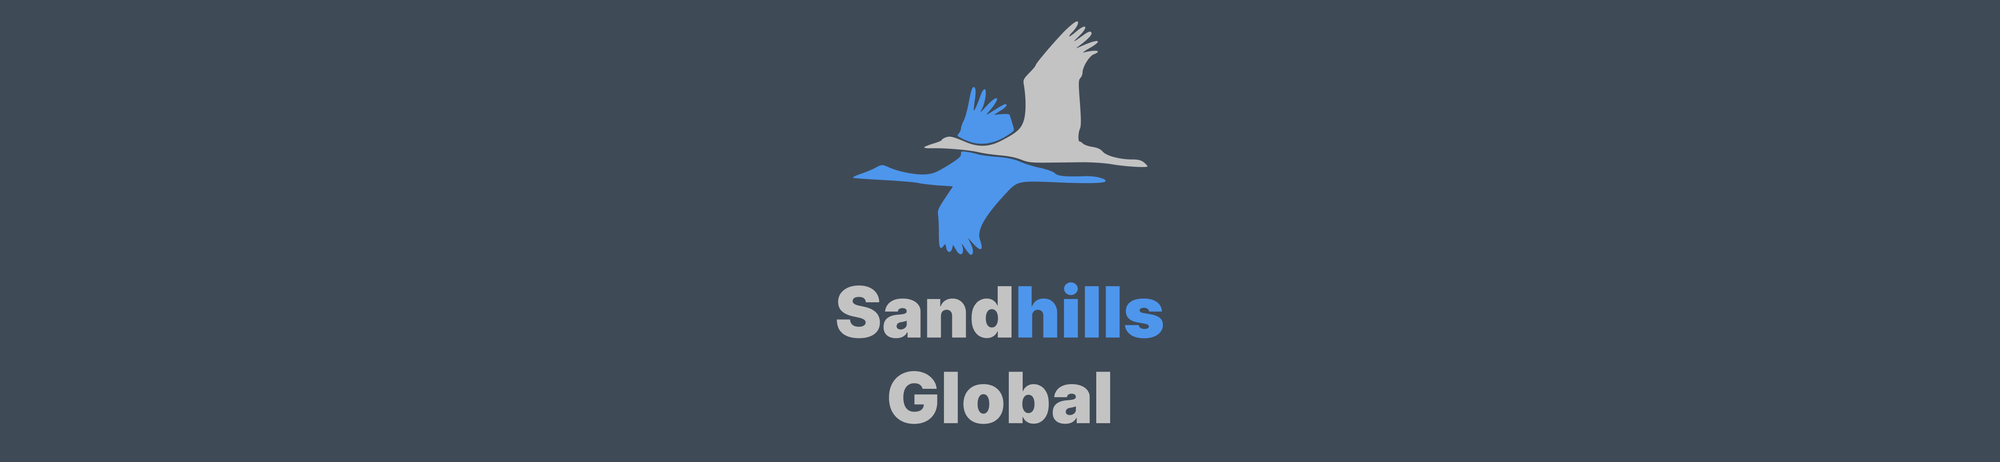 Web Developer - Sandhills Global